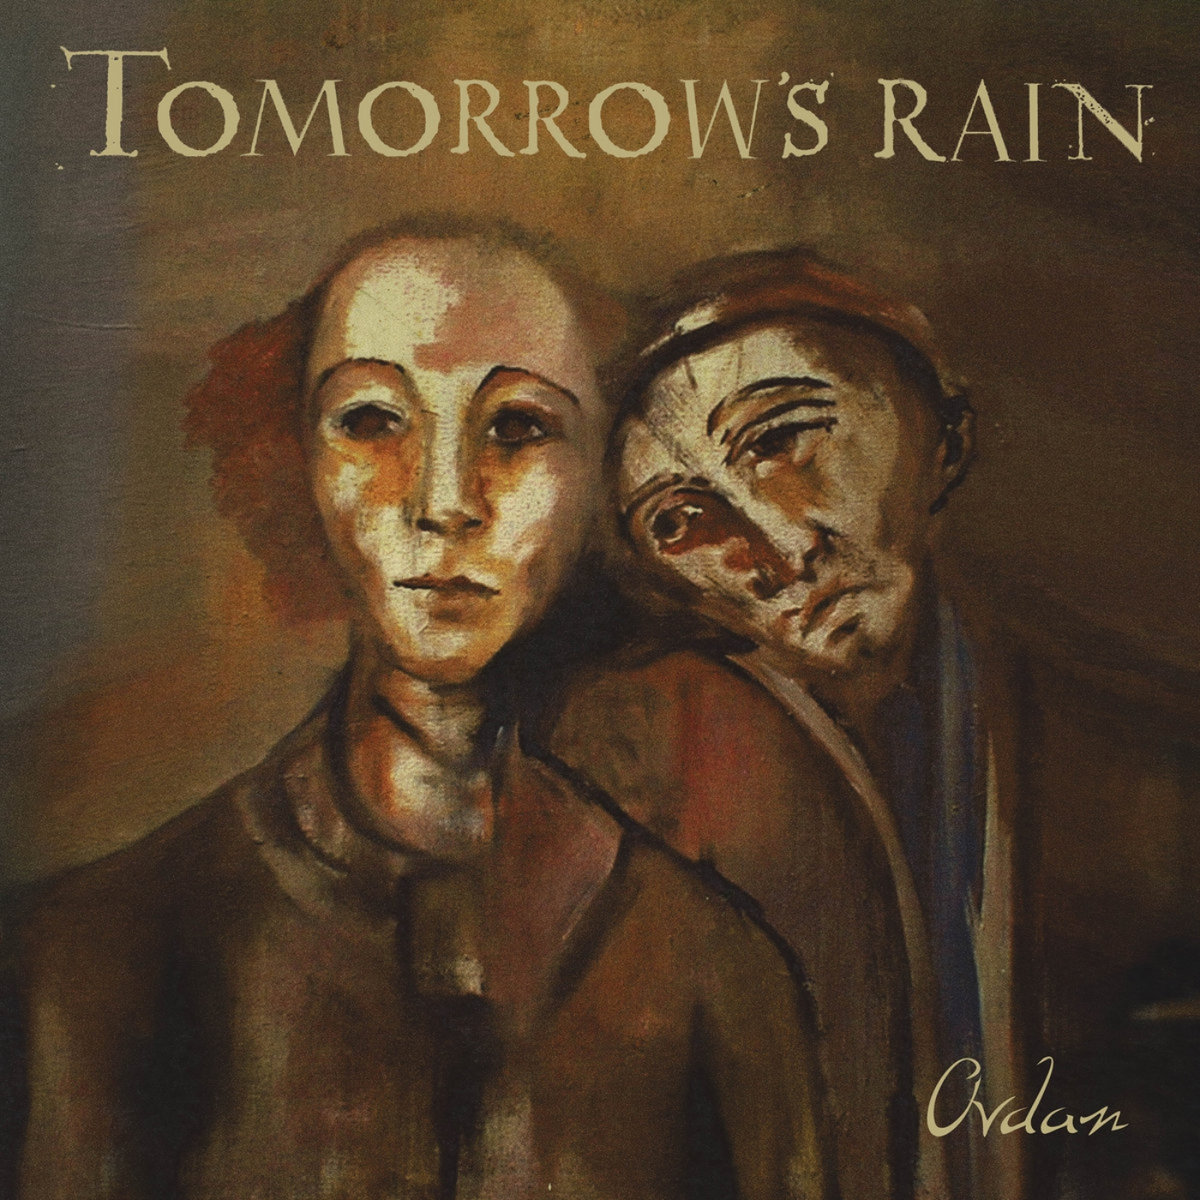 ALBUM REVIEW: Ovdan by Tomorrow’s Rain